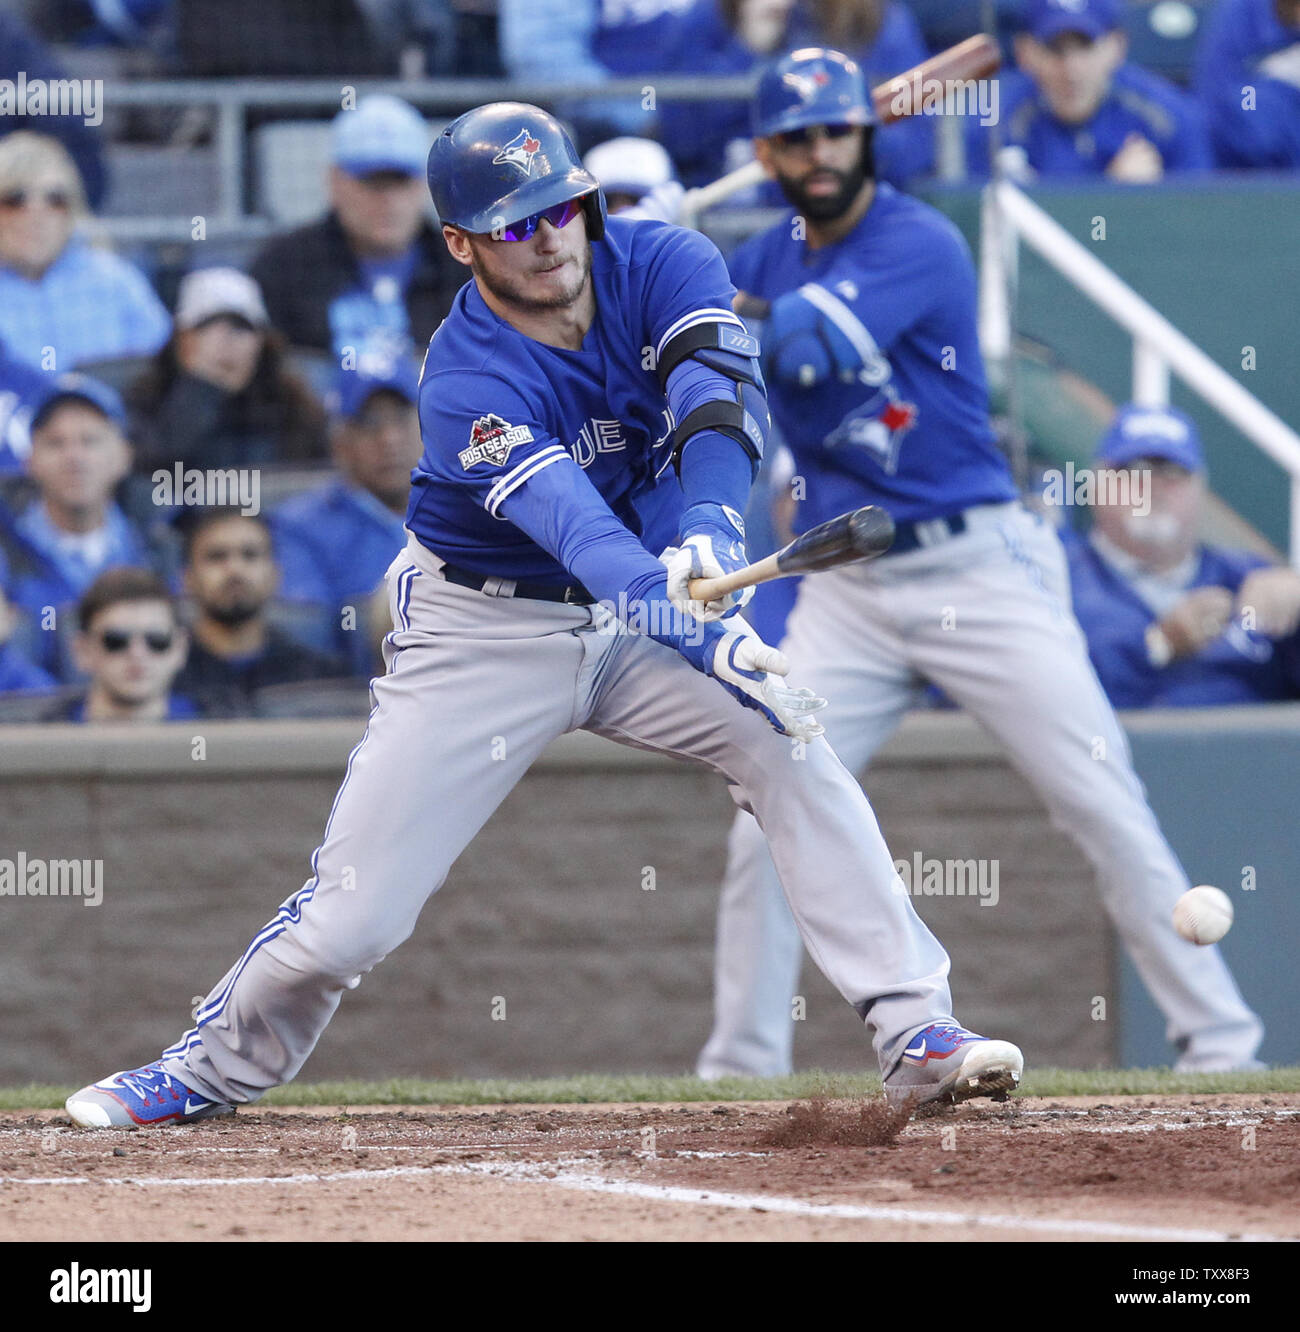 Download Toronto Blue Jays Player Josh Donaldson Wallpaper